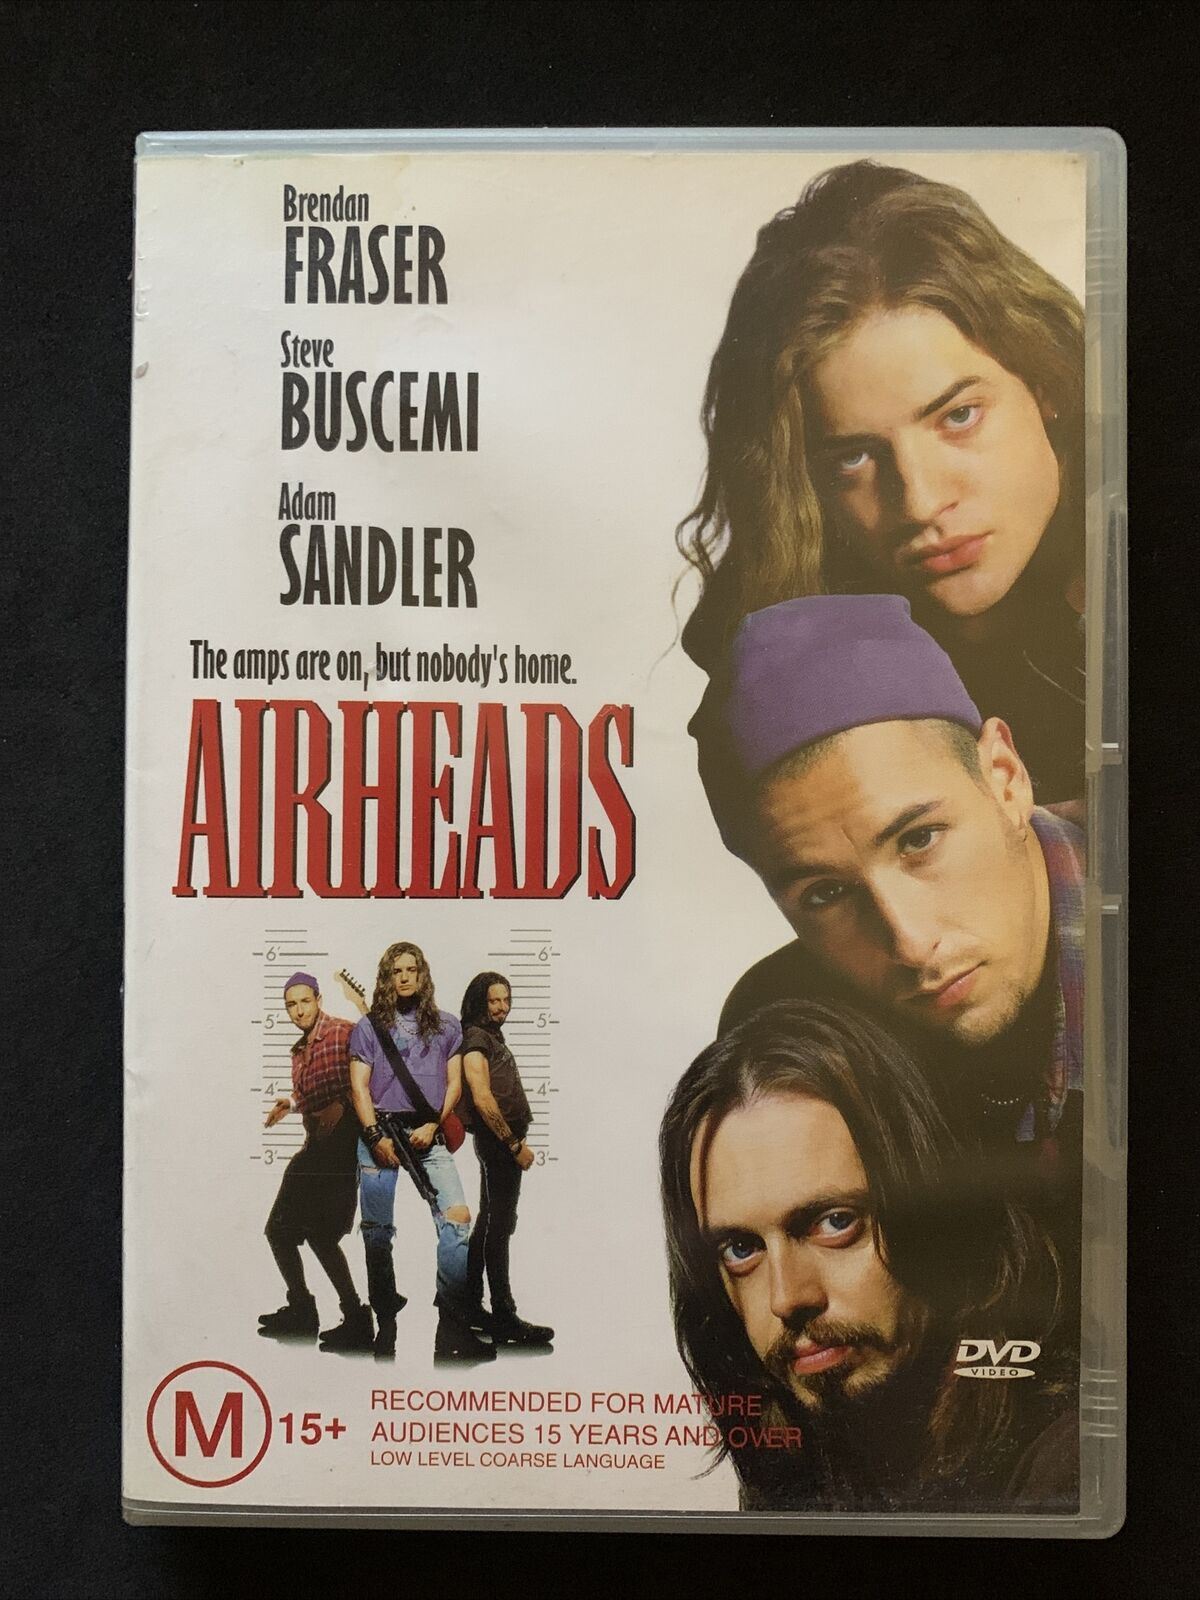 Airheads (DVD, 1994) Brendan Fraser, Steve Buscemi, Adam Sandler - Region 4